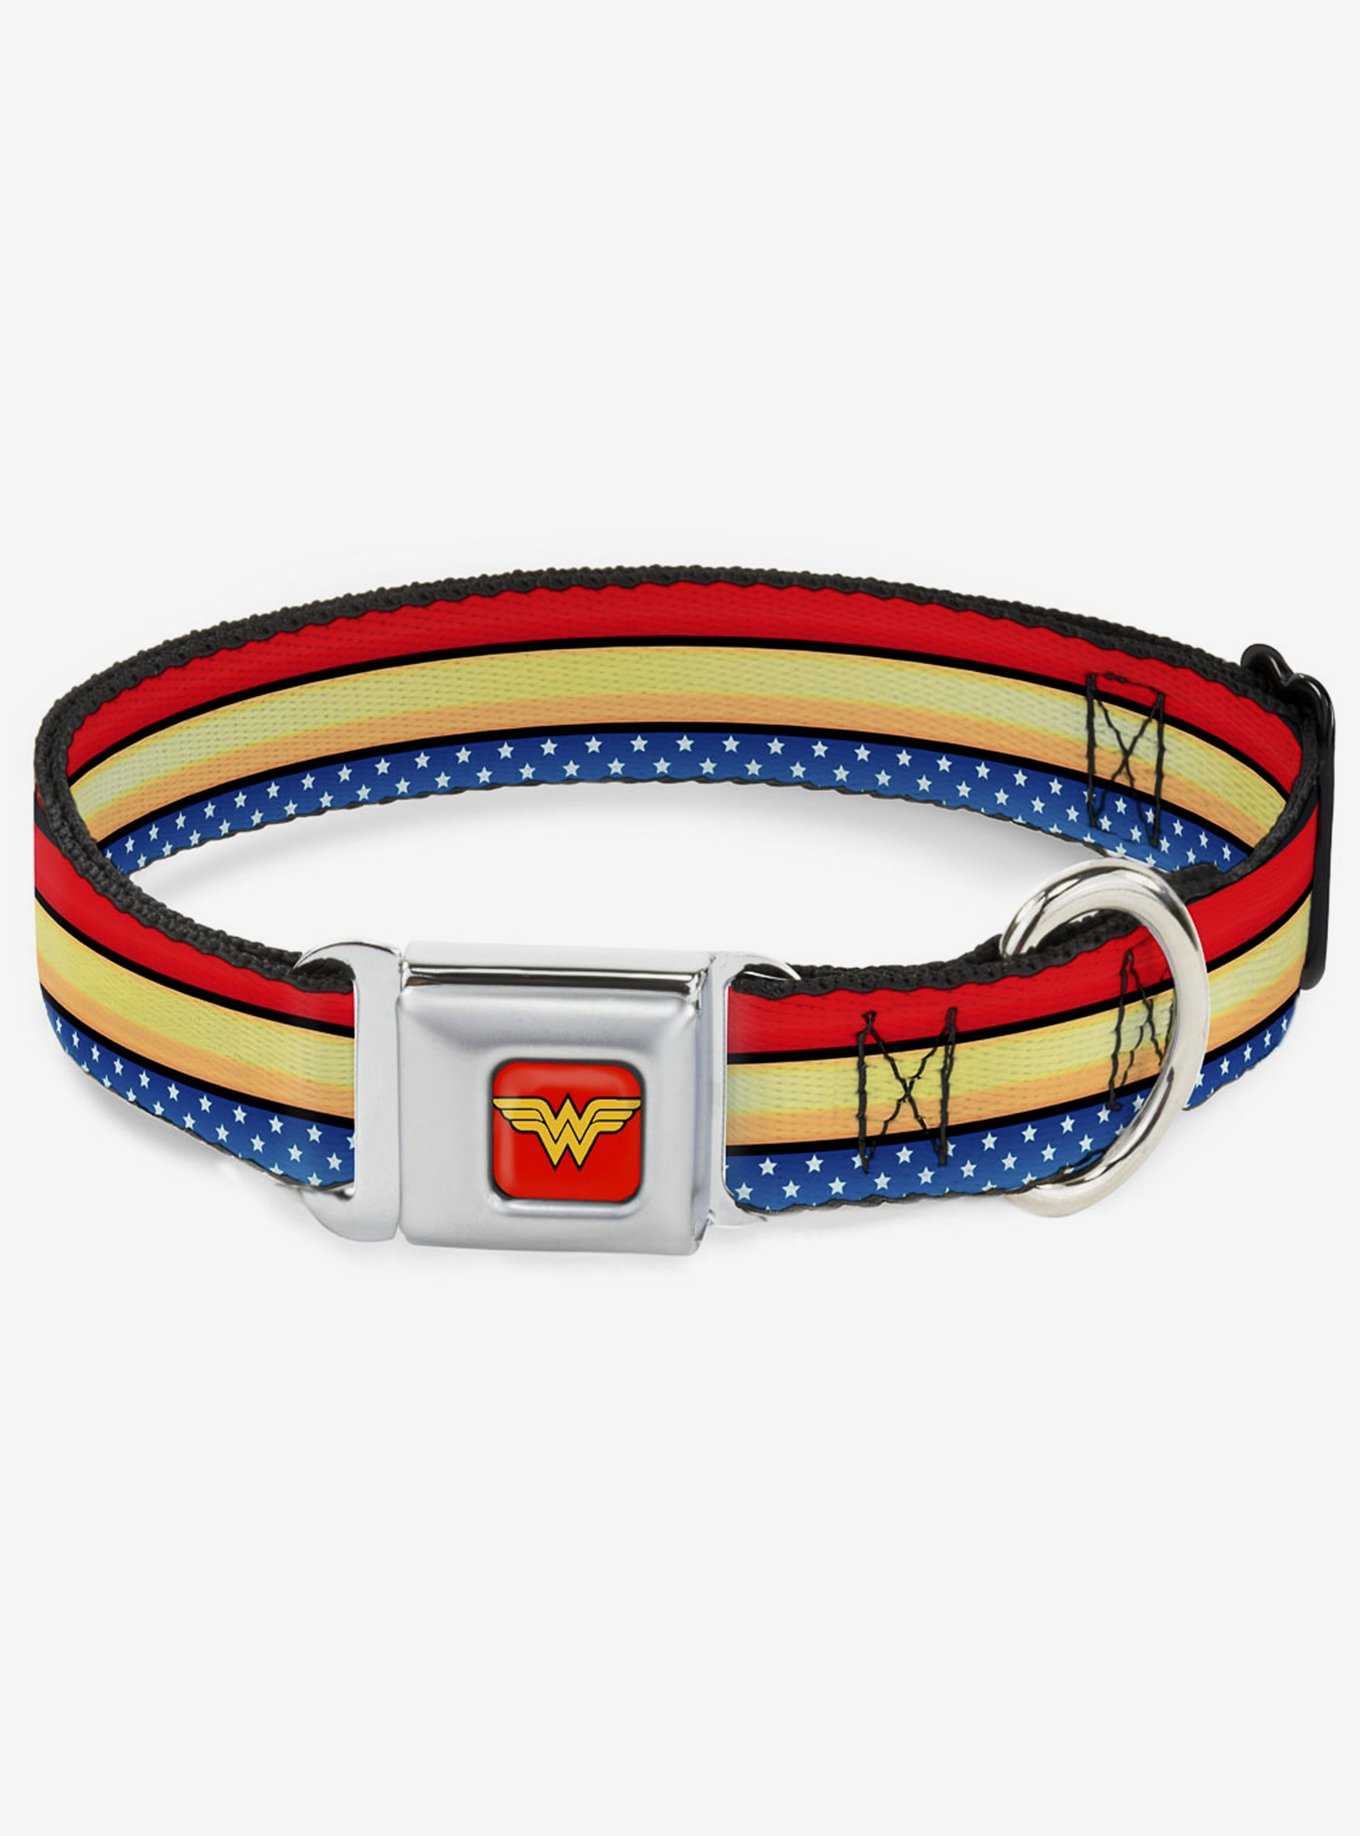 DC Comics Justice League Wonder Woman Stripe Stars Red Gold Blue White Seatbelt Buckle Dog Collar, , hi-res